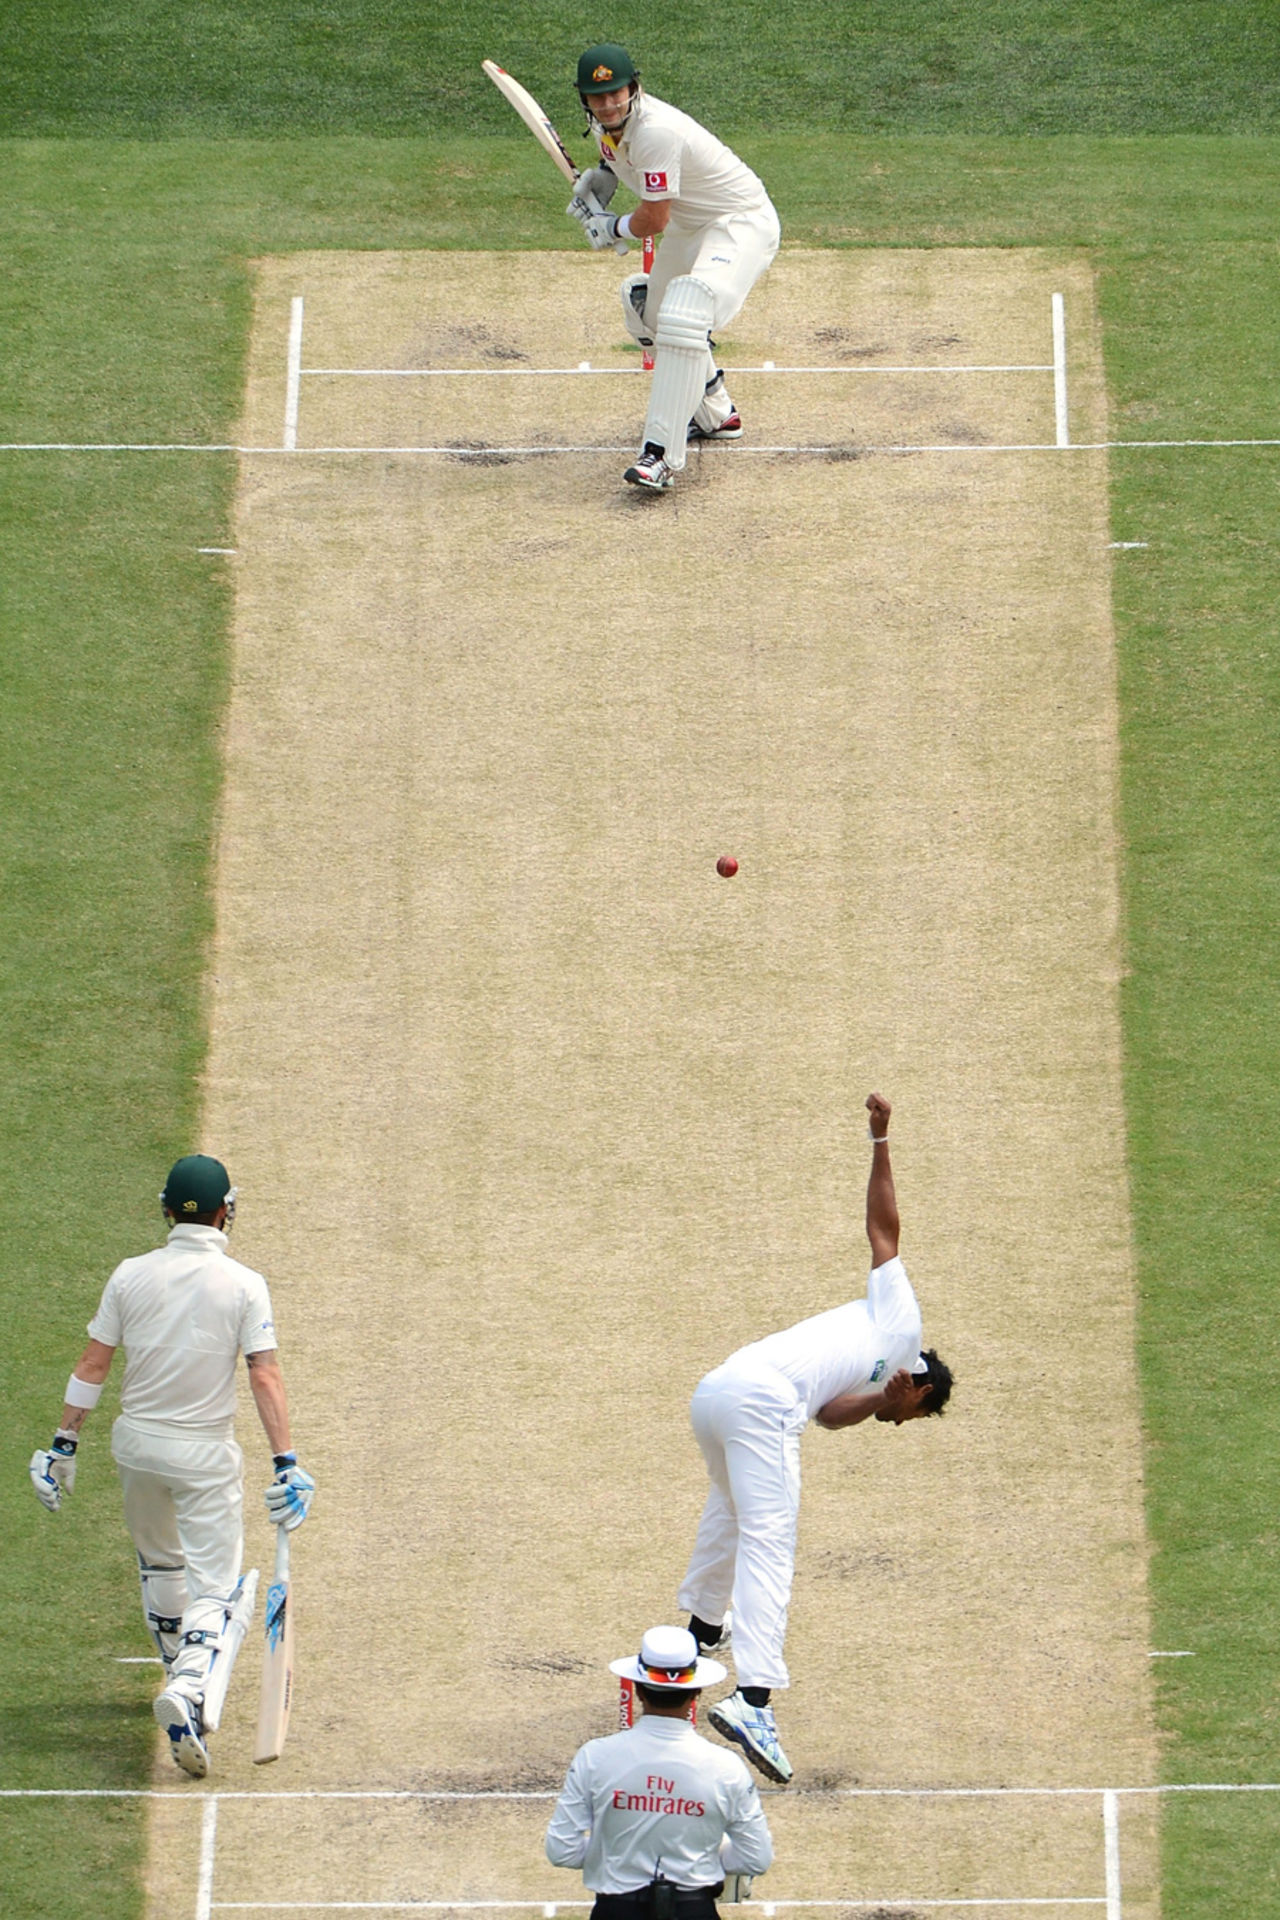 Chanaka Welegedara bowls to Shane Watson, Australia v Sri Lanka, 2nd Test, Melbourne, 2nd day, December 27, 2012